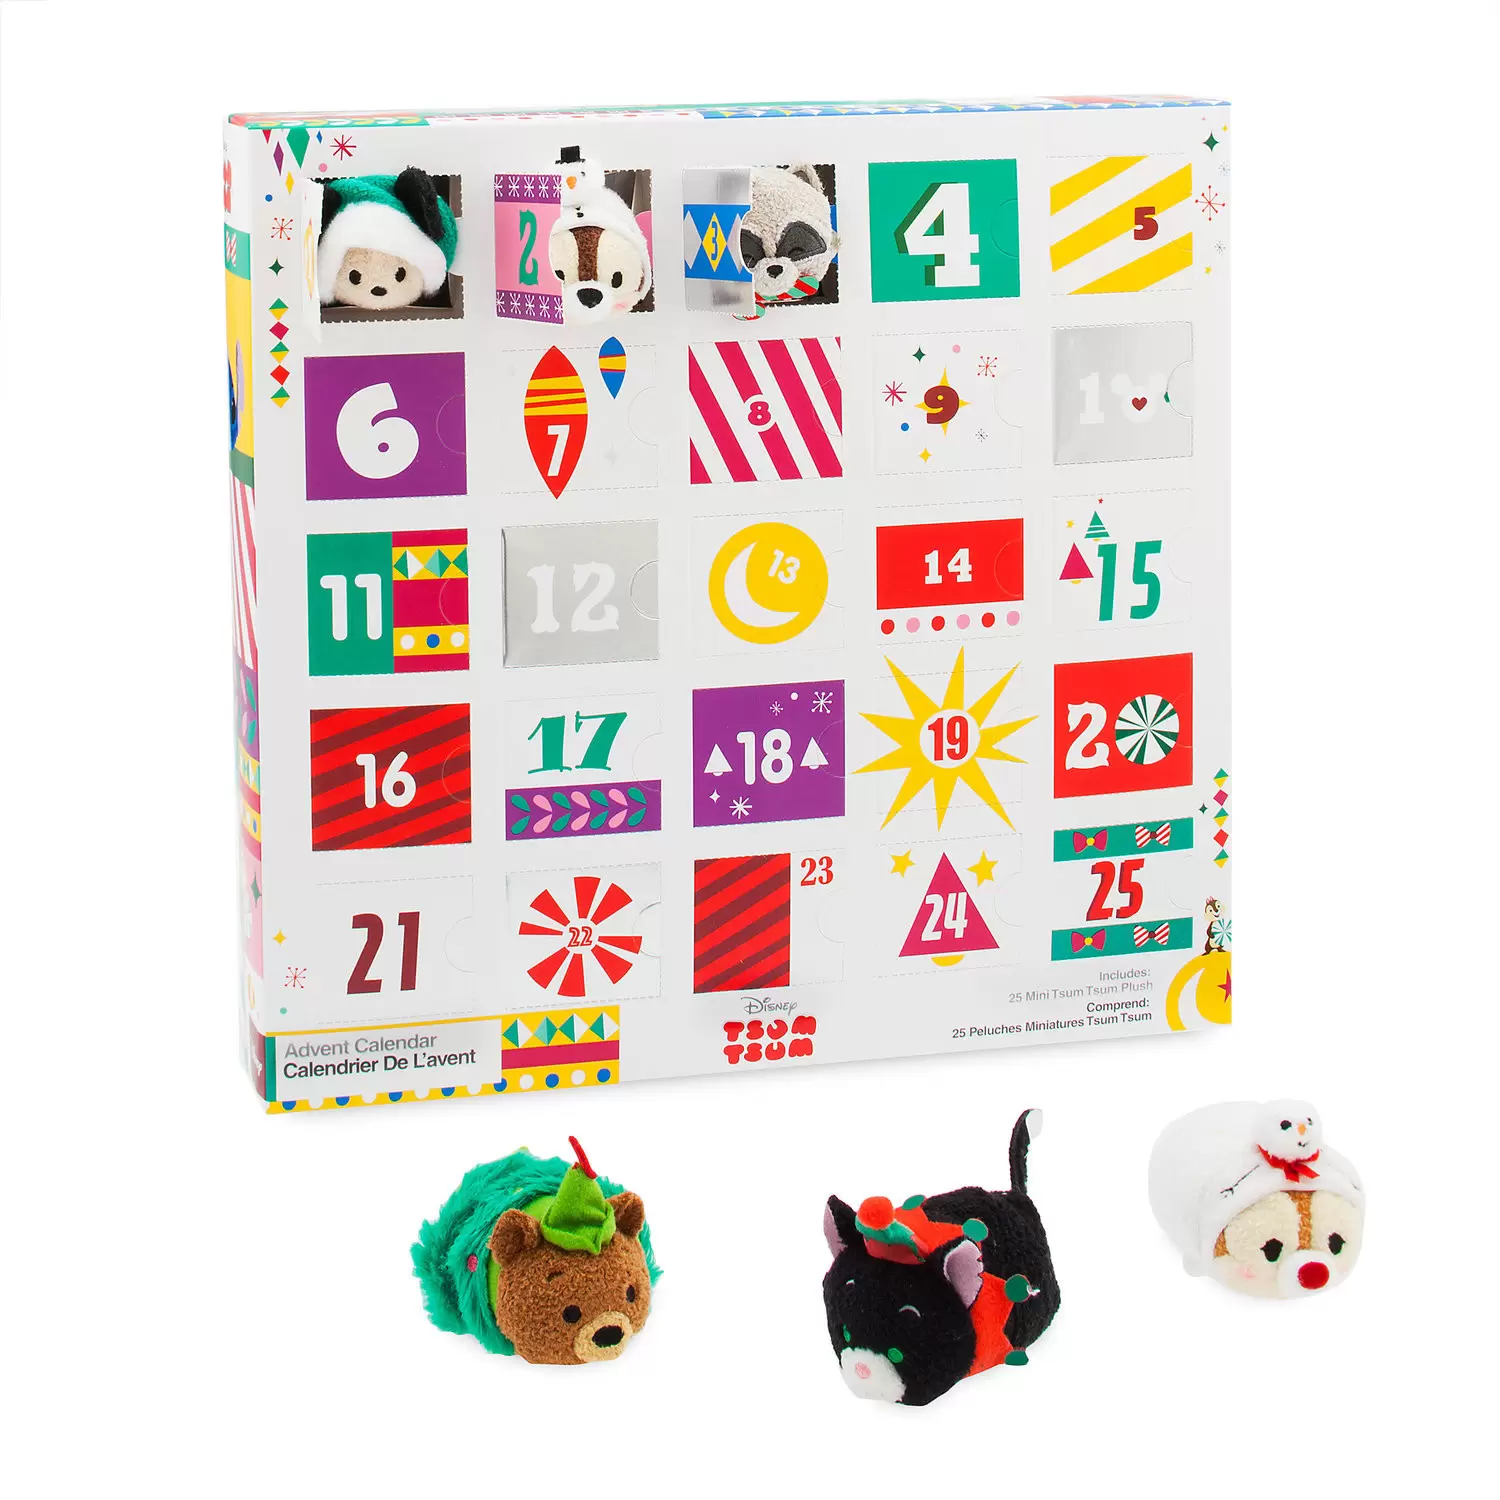 Tsum Tsum Plush Bag And Box Sets - Advent Calendar 2018